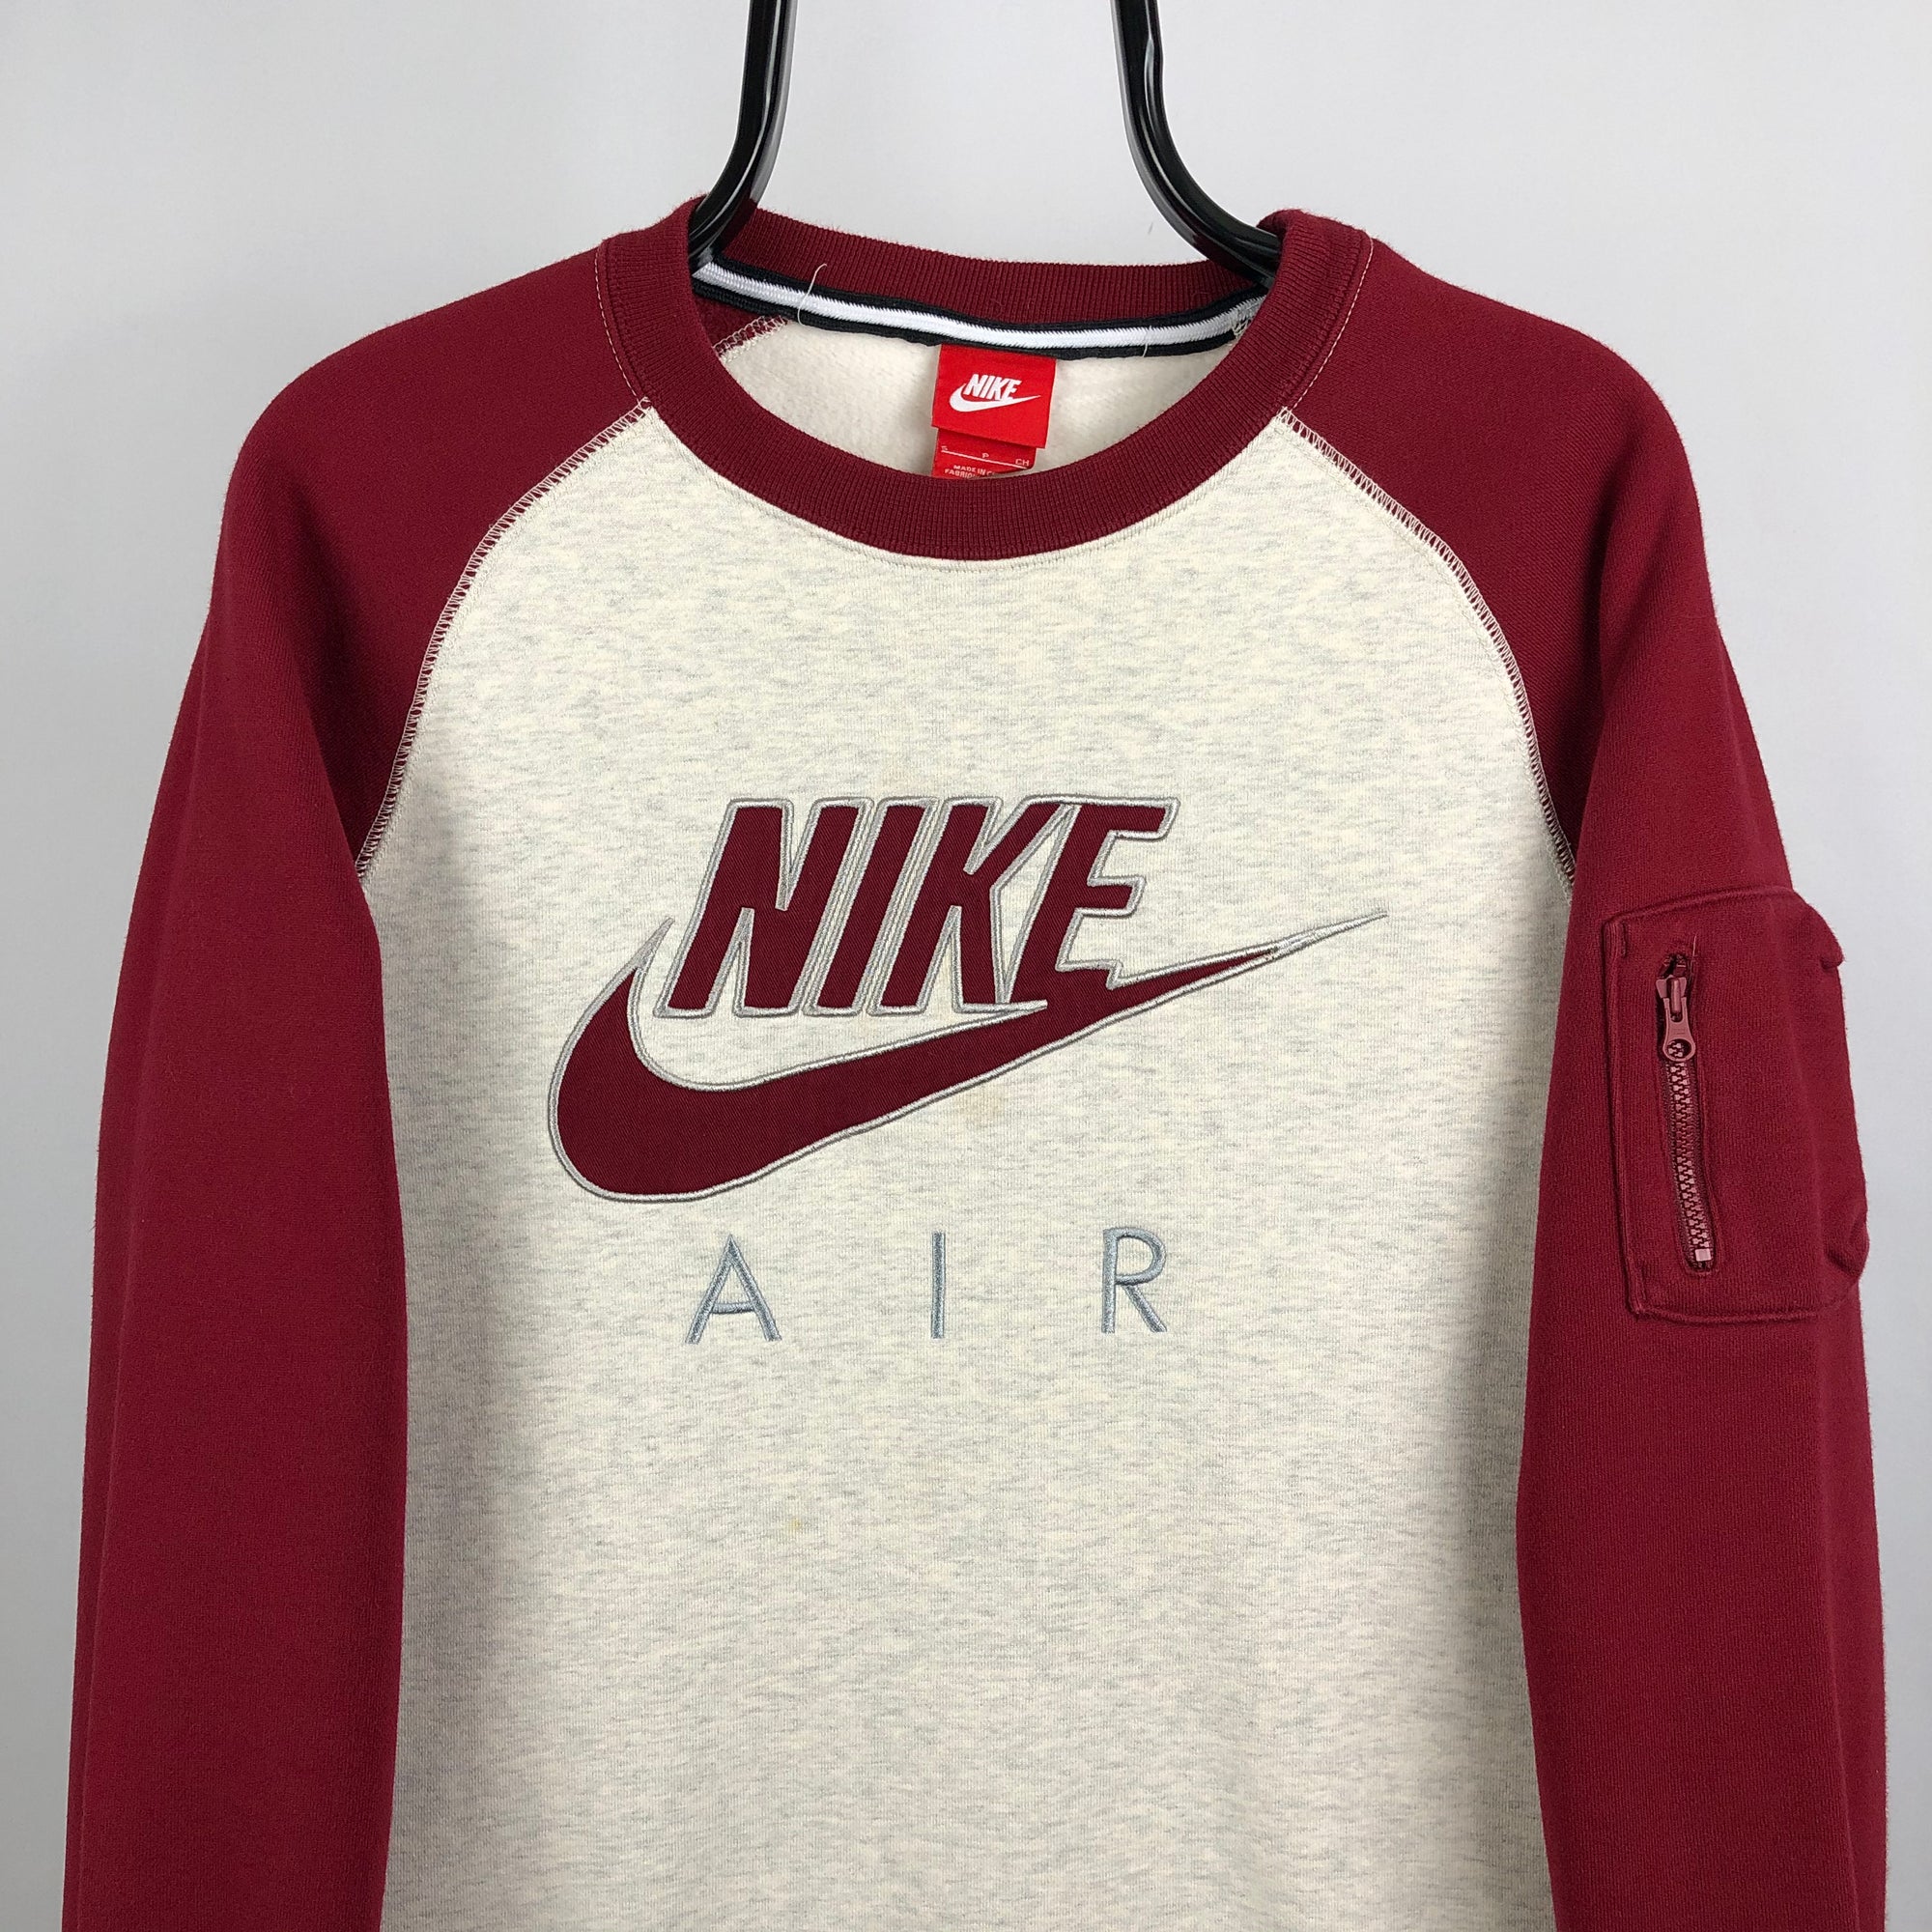 Nike Air Spellout Sweatshirt in Grey/Burgundy - Men's Small/Women's Medium